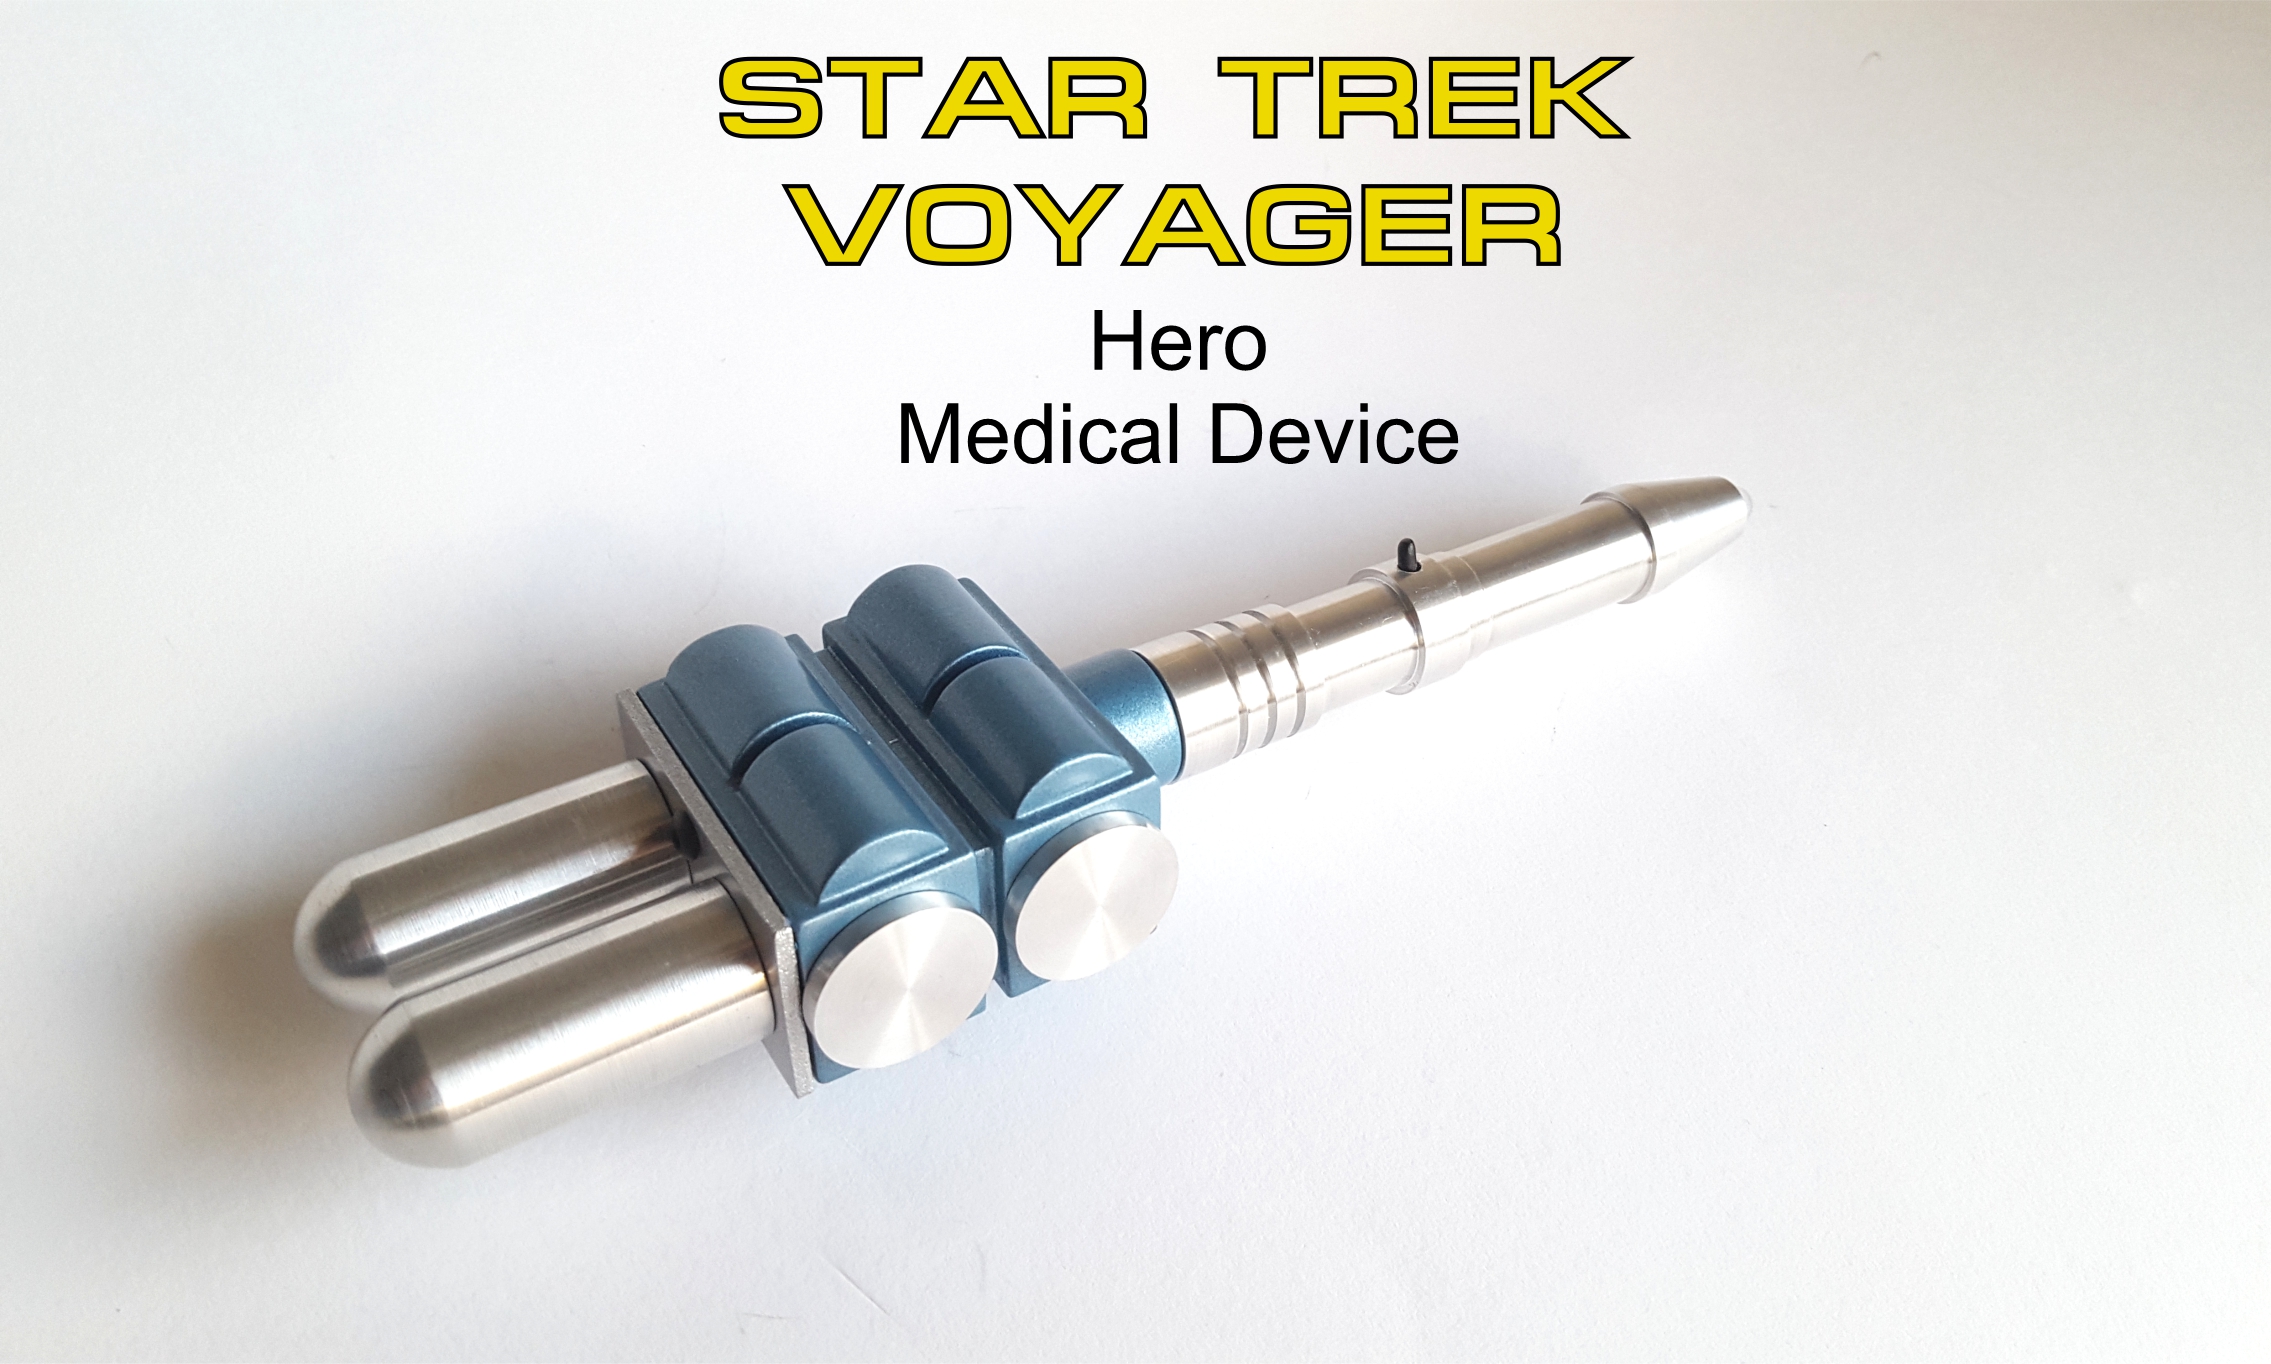 Voyager-Drone-Medical-Tool-2.jpg